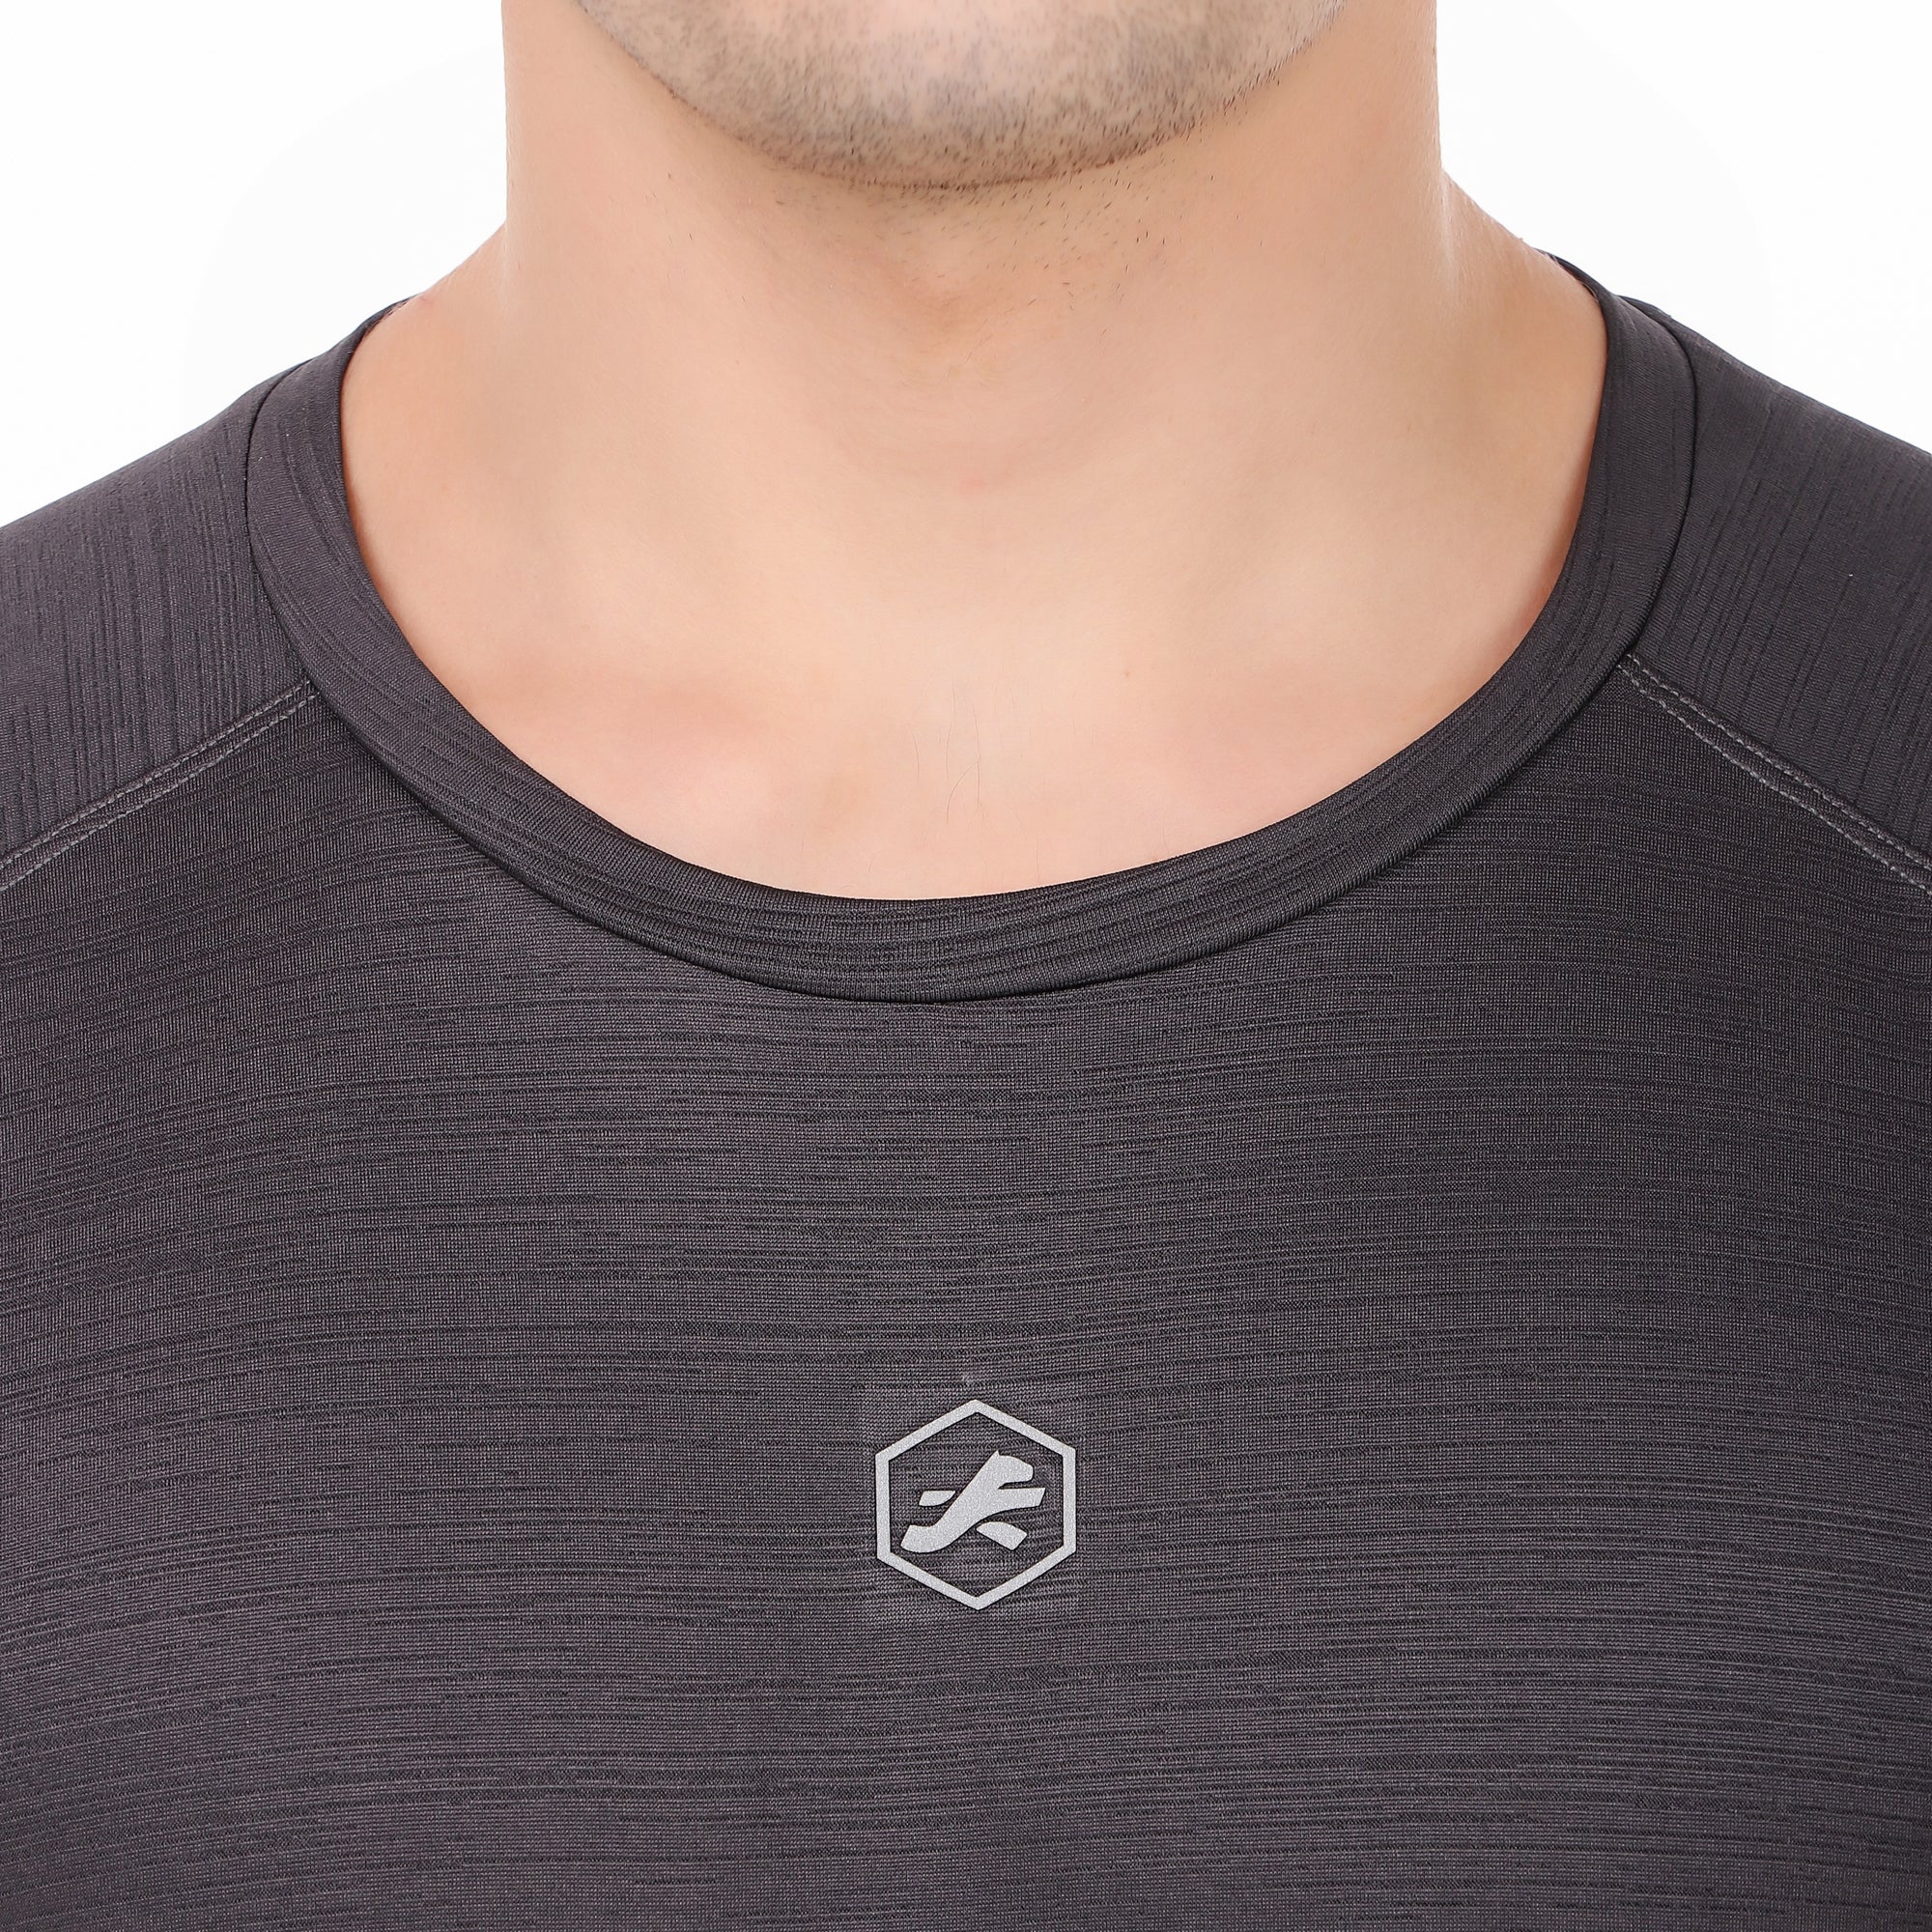 Performance Iconic Tshirt For Men FS (Anchor Grey)